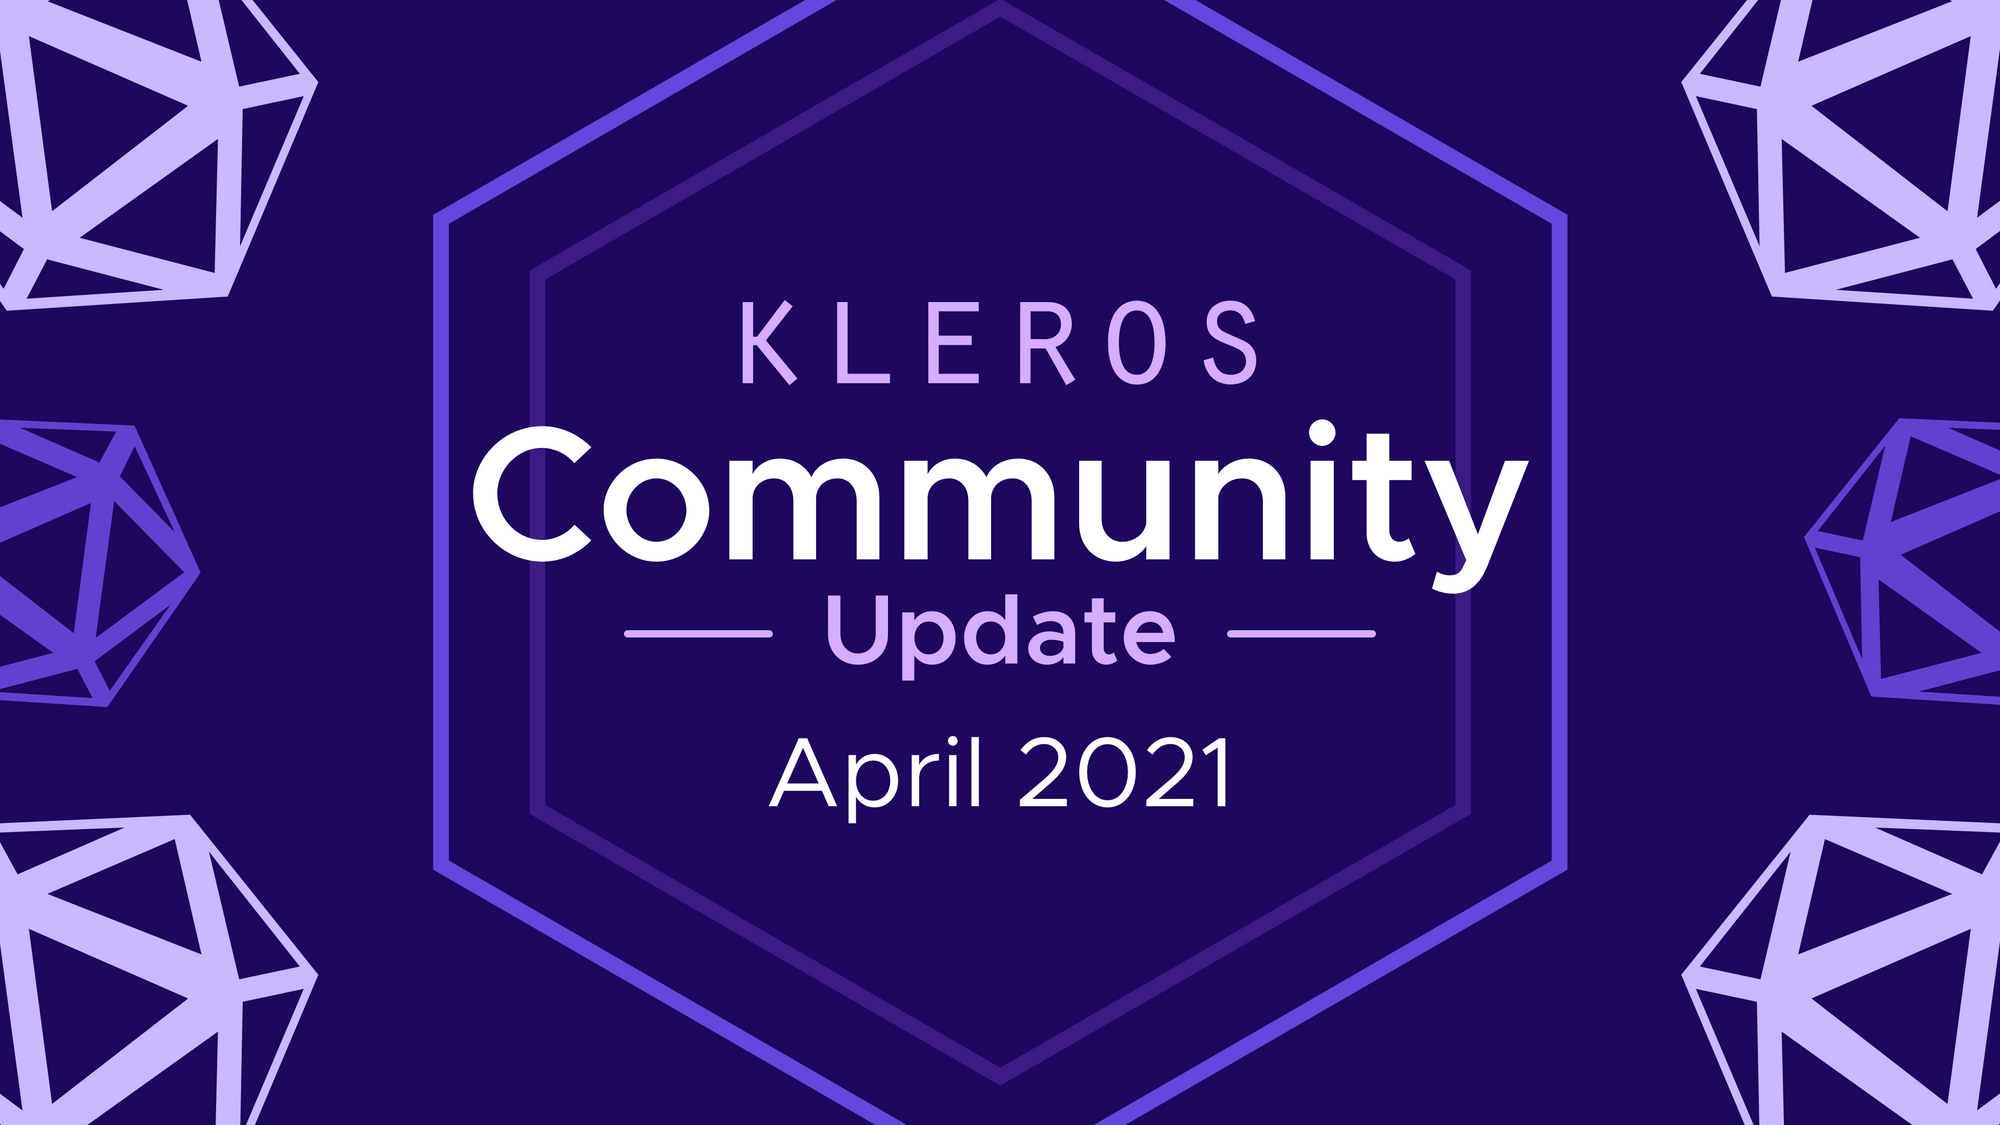 Kleros Community Update - April 2021